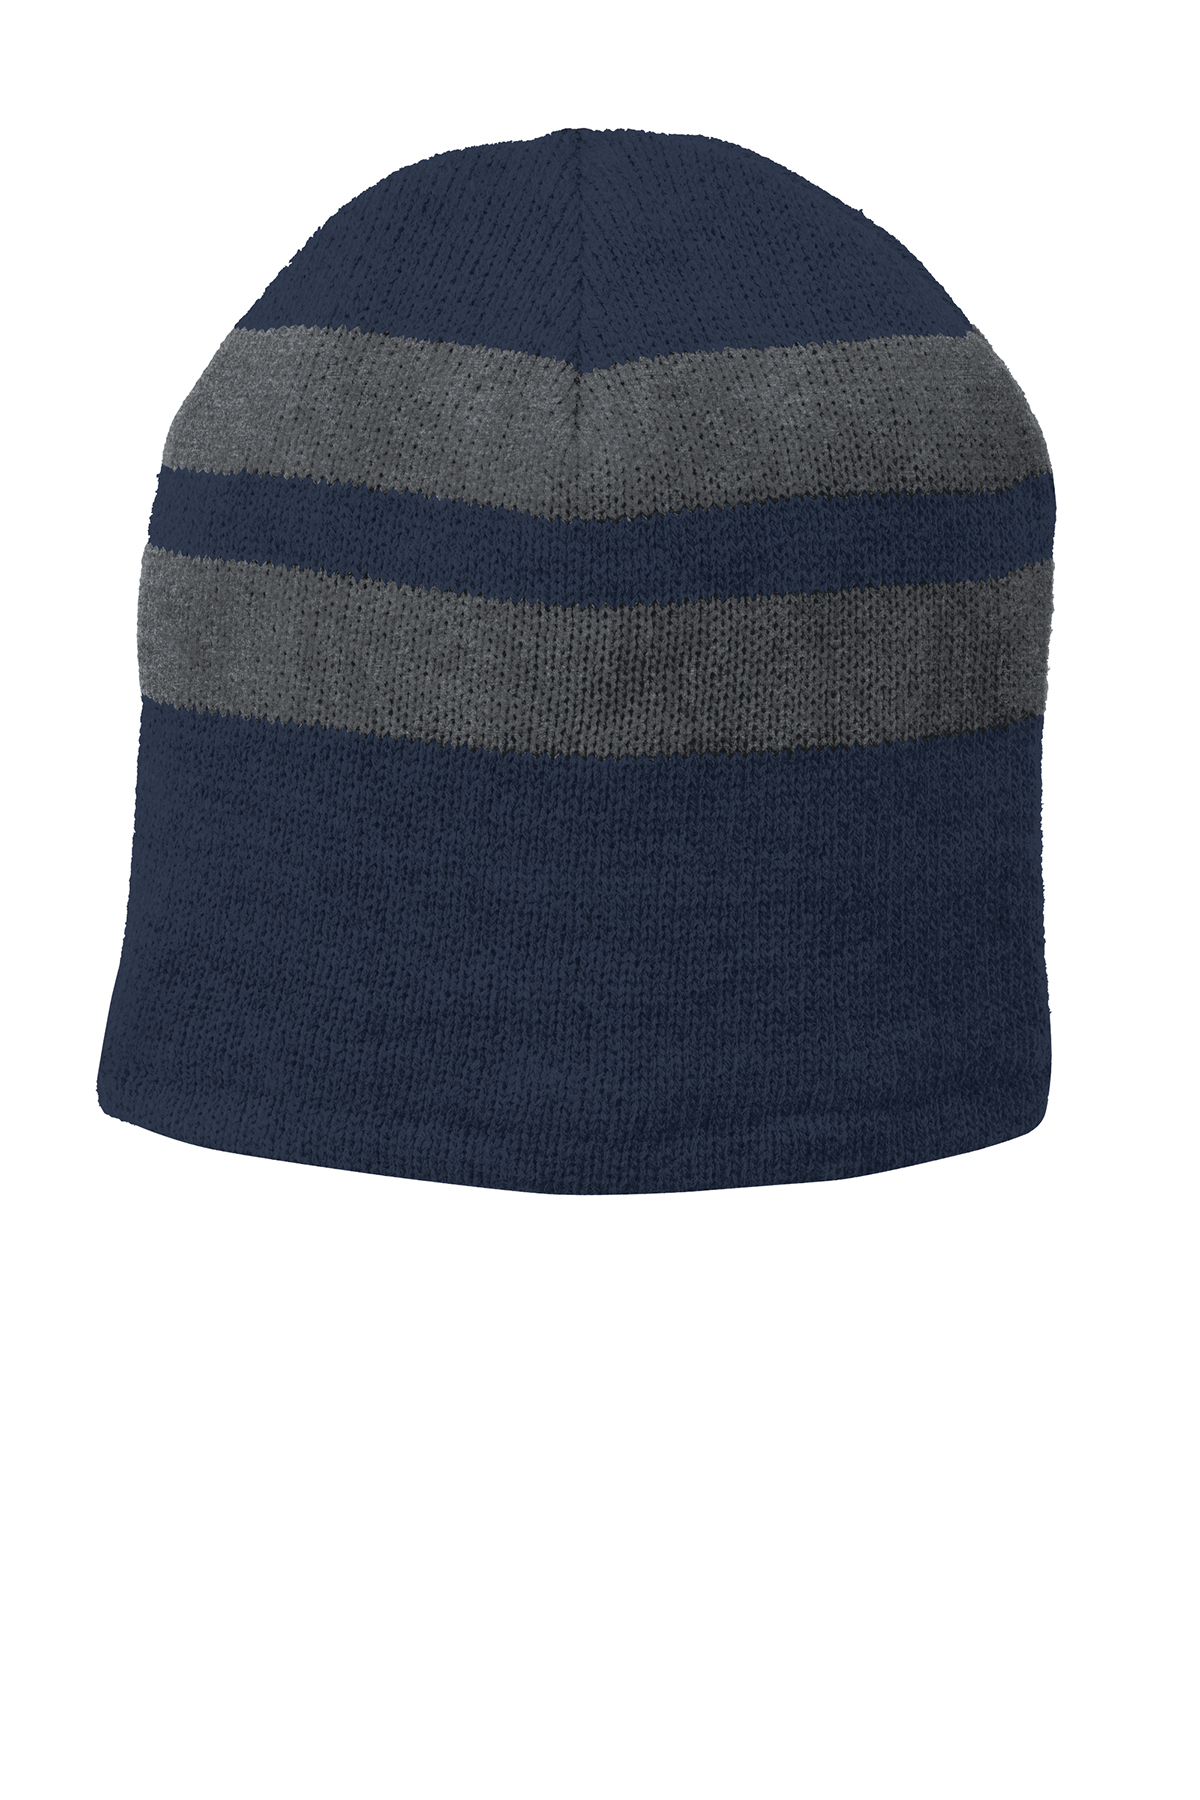 Port & Company Fleece-Lined Striped Beanie Cap | Product | Port & Company